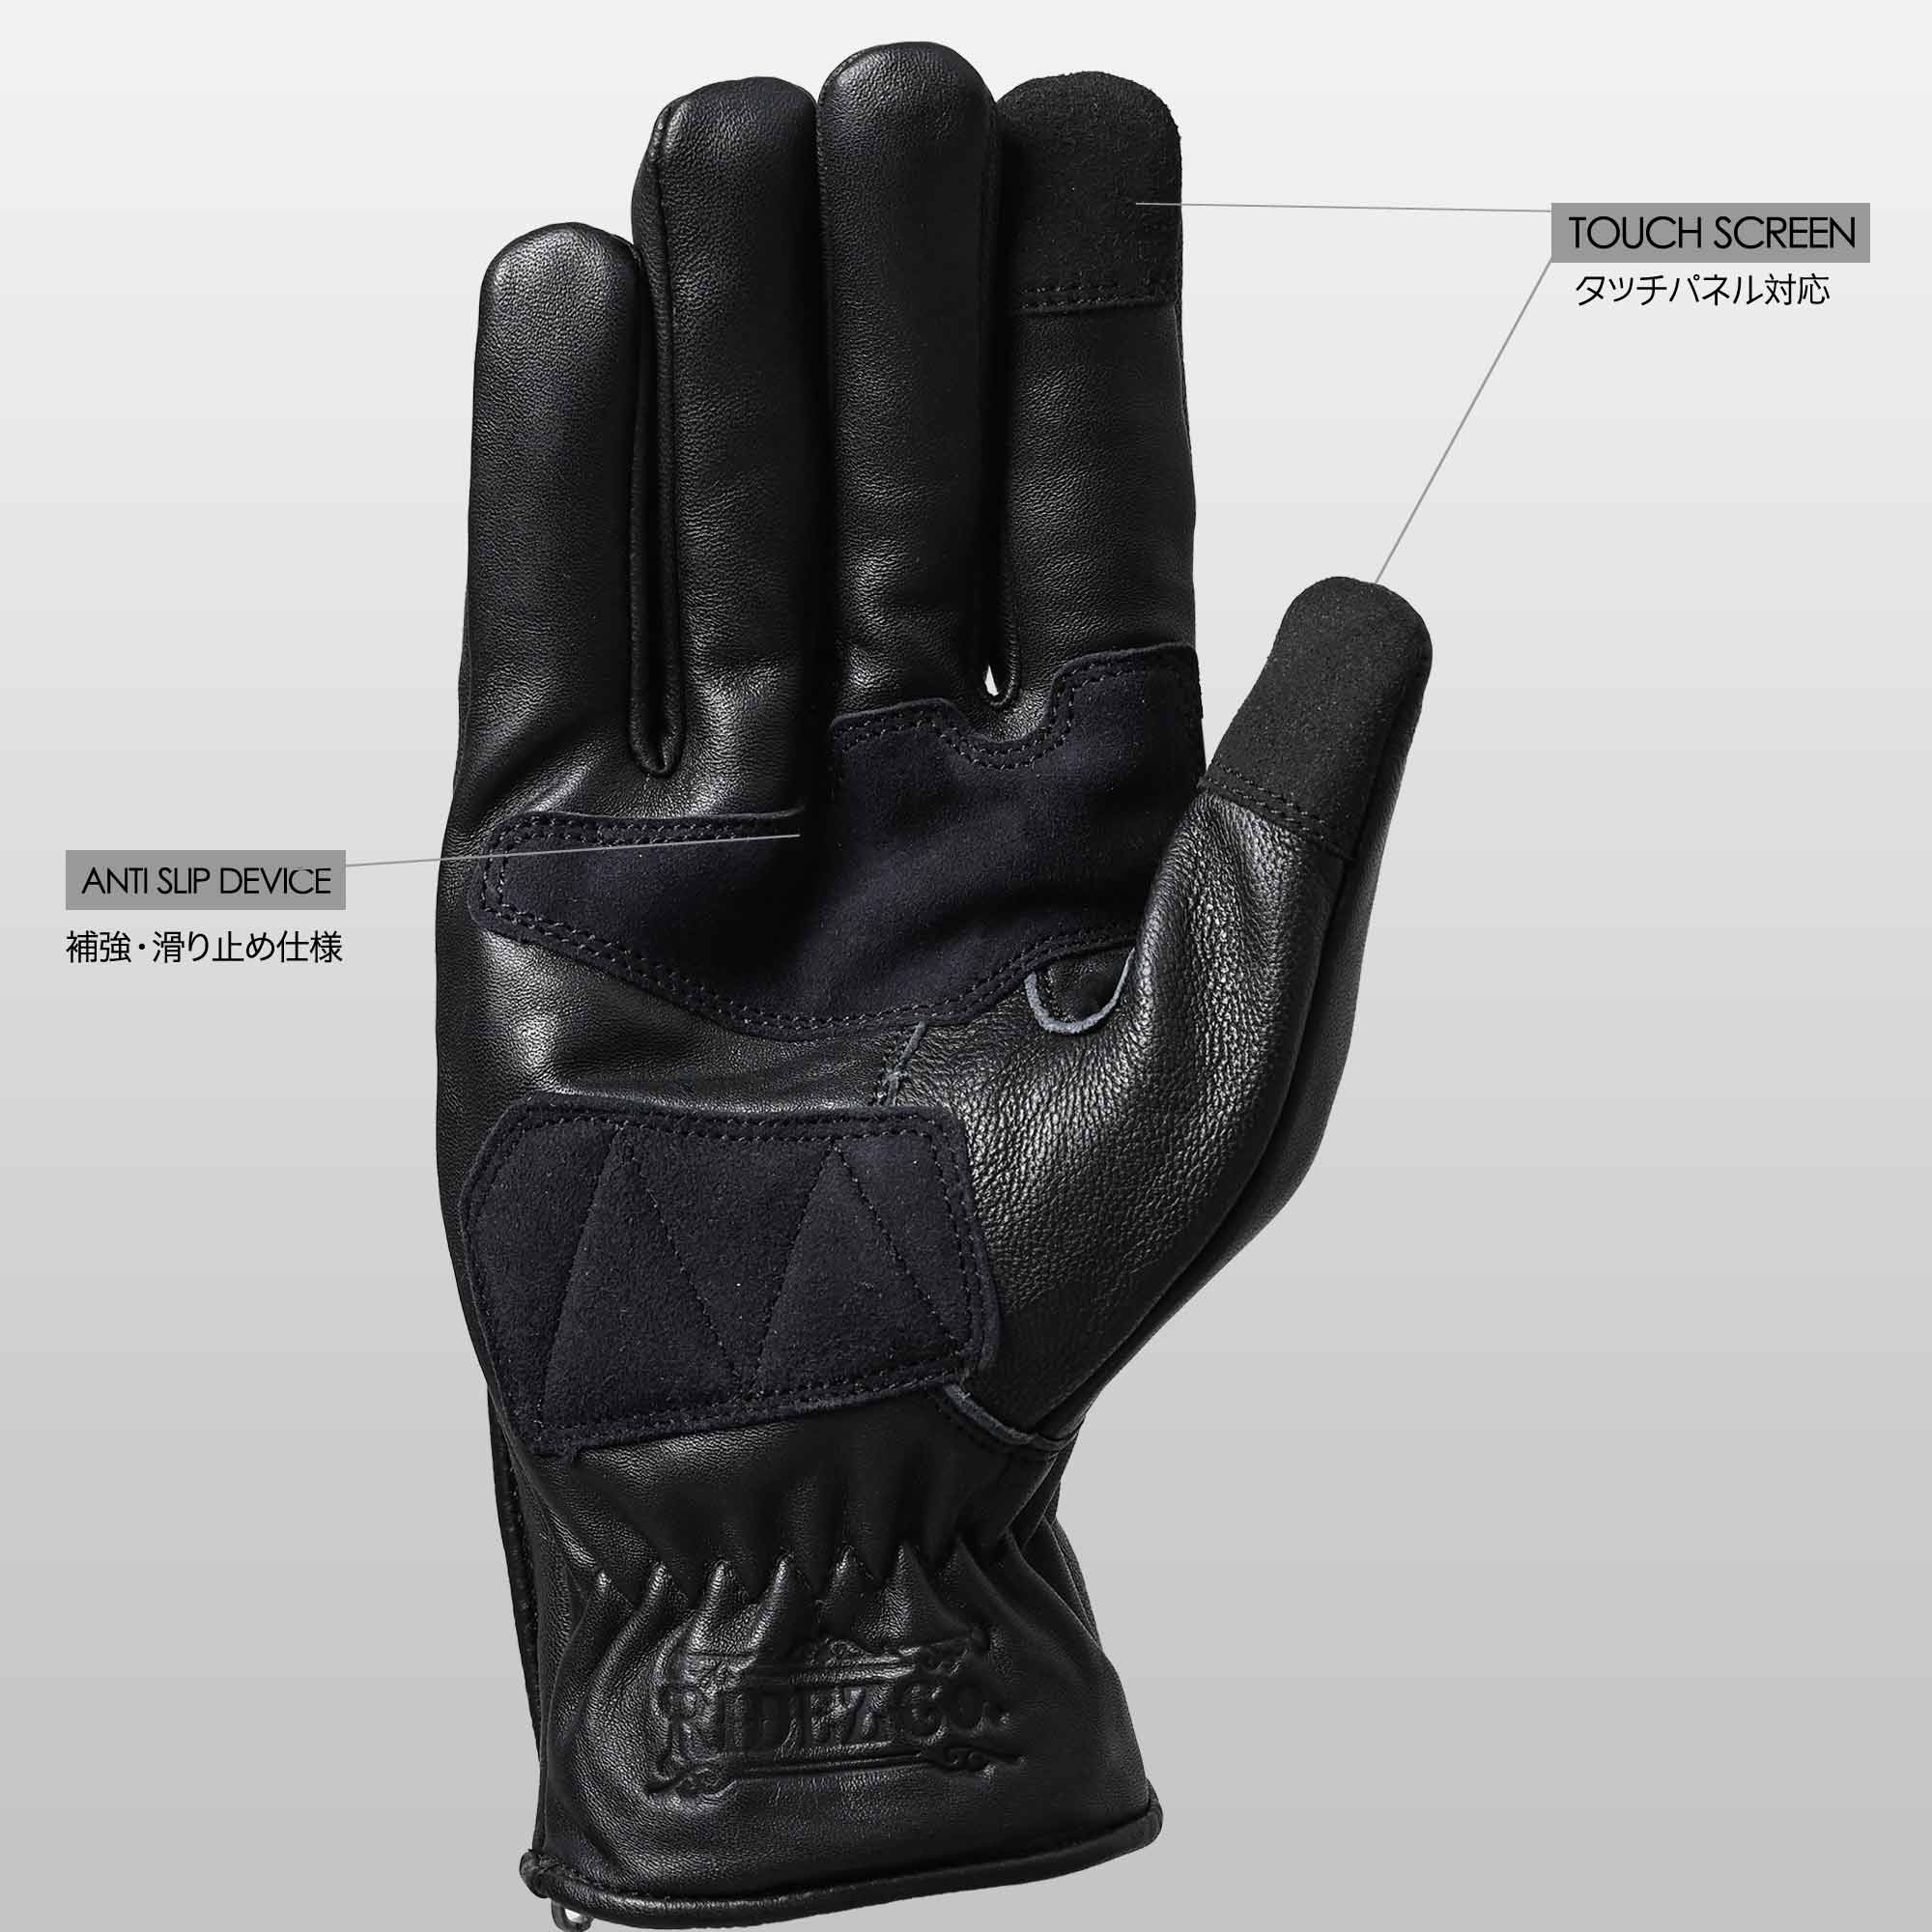 RIDEZ MOTO GLOVES VINTAGE Autumn/Winter Cold Protection Motorcycle Gloves BLACK RLG75 